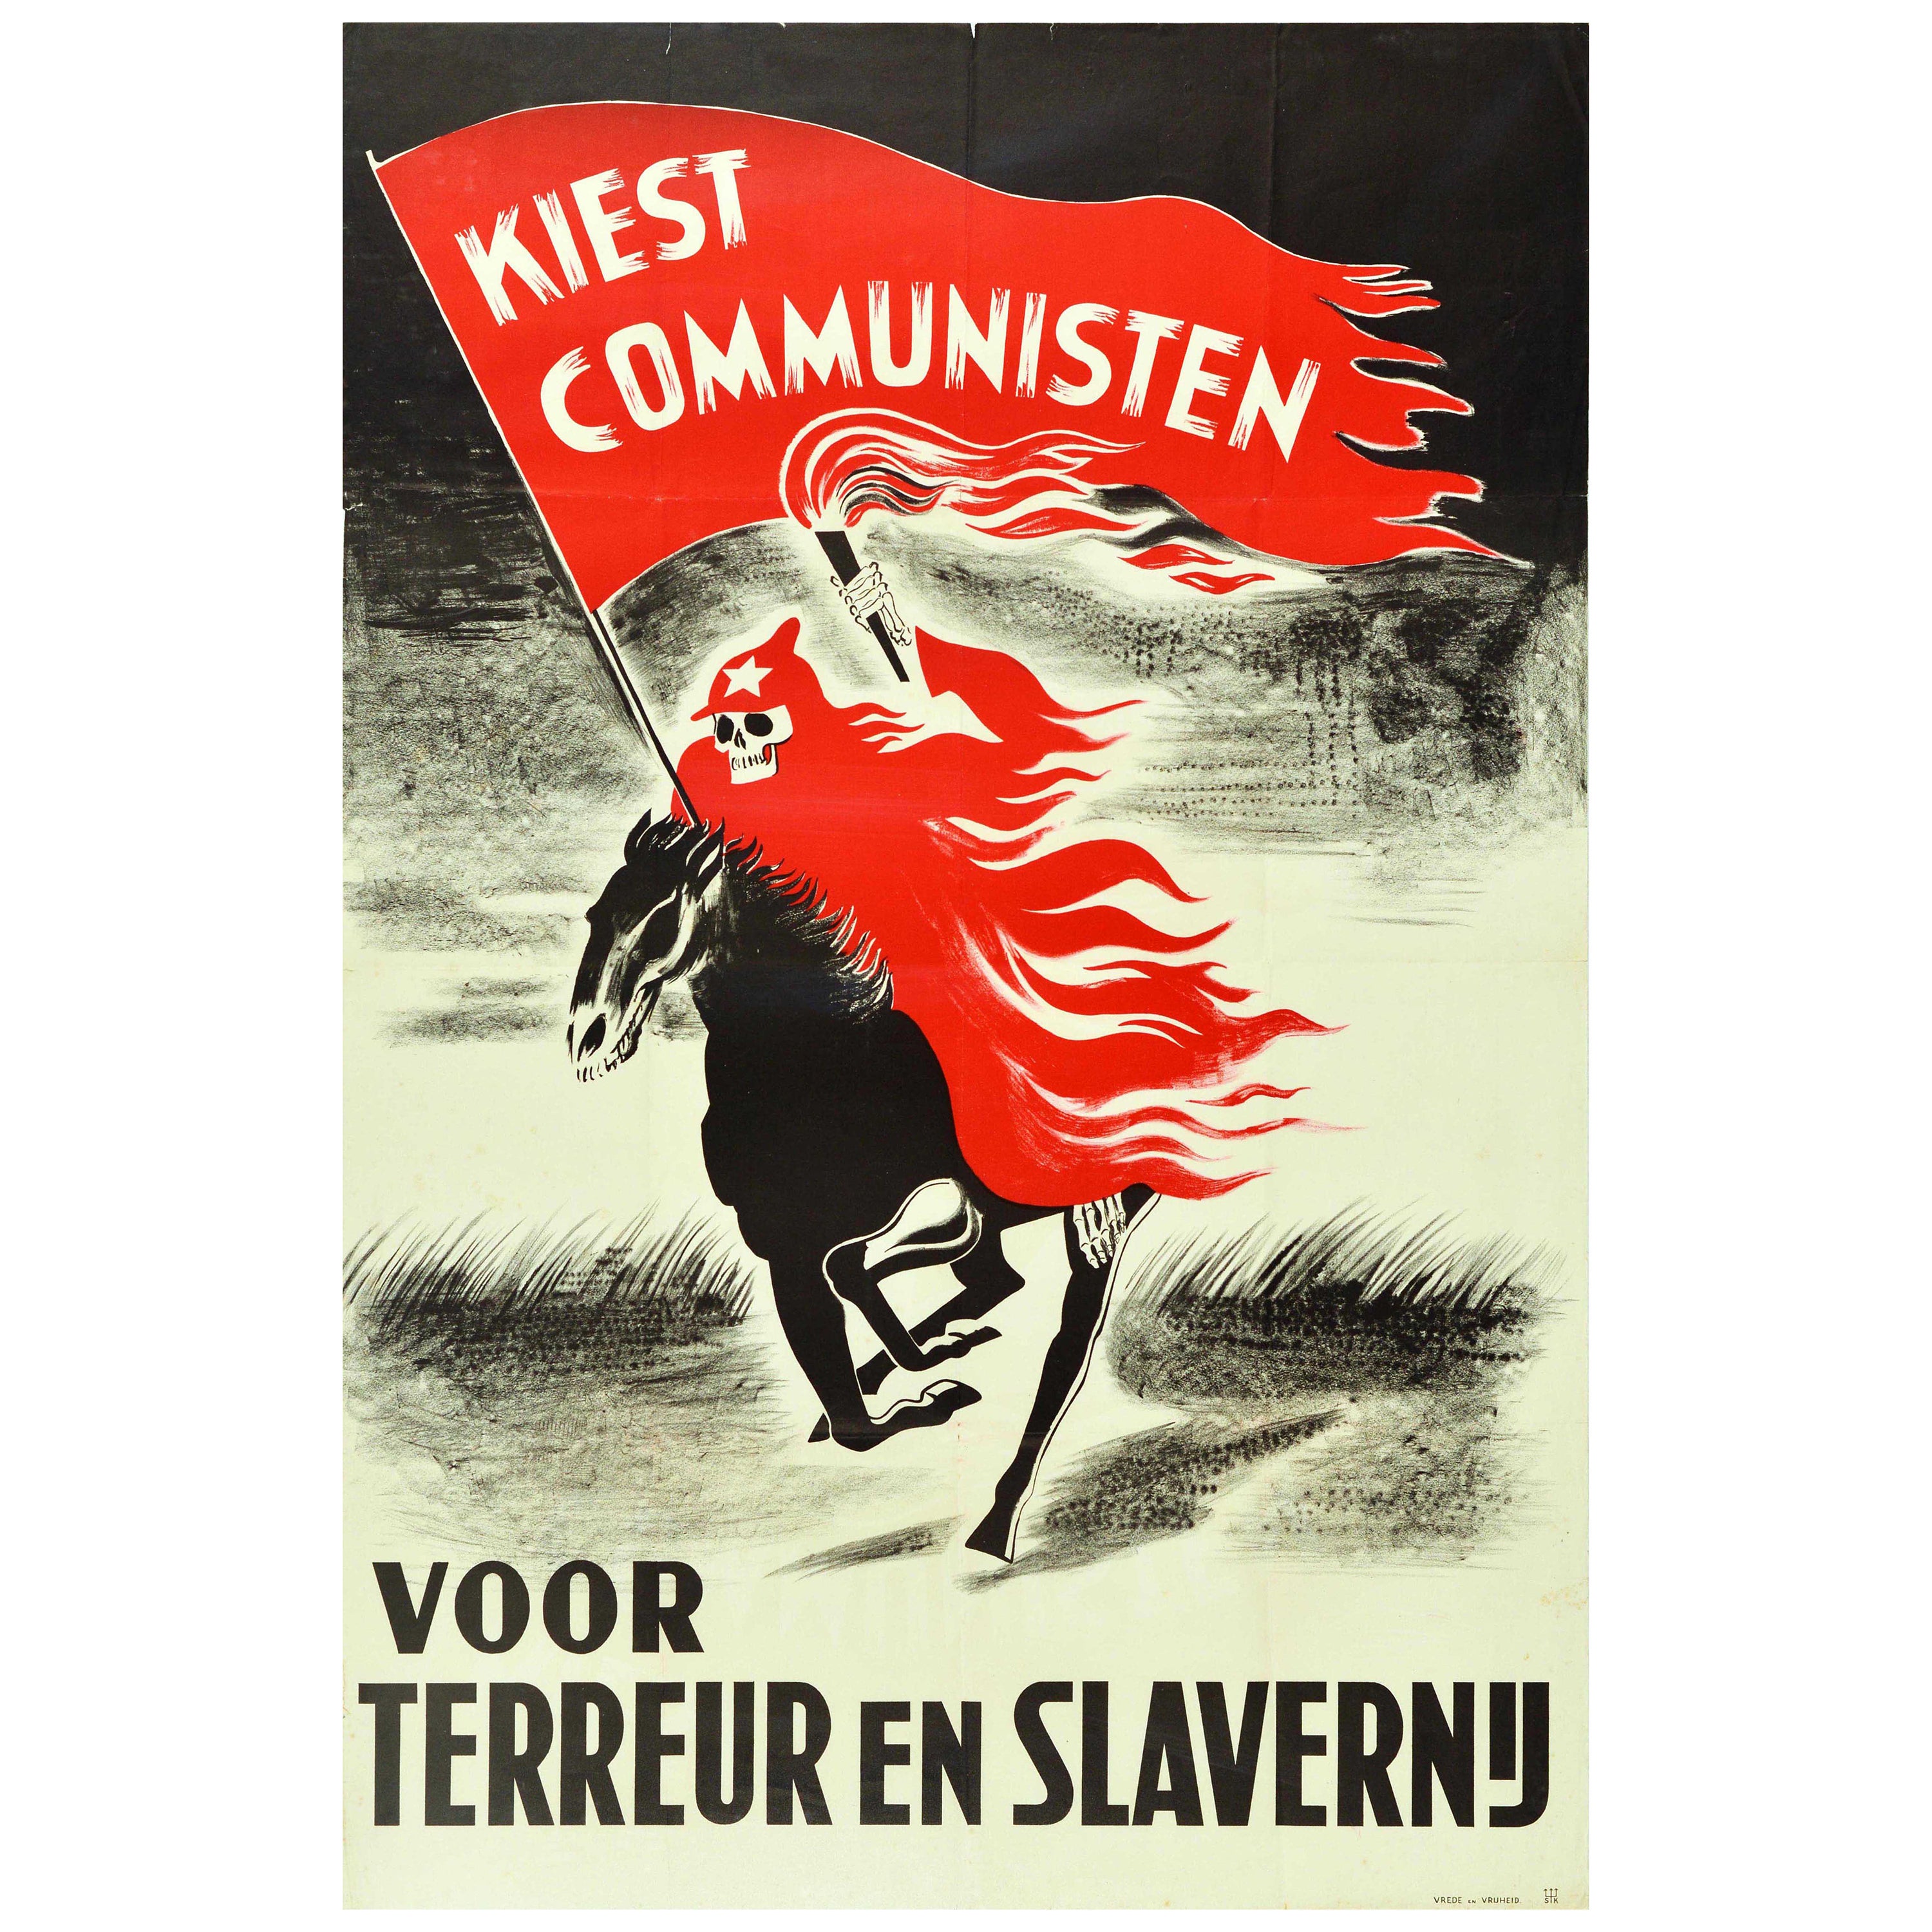 Original Vintage Dutch Election Propaganda Poster Communism Terror And Slavery For Sale